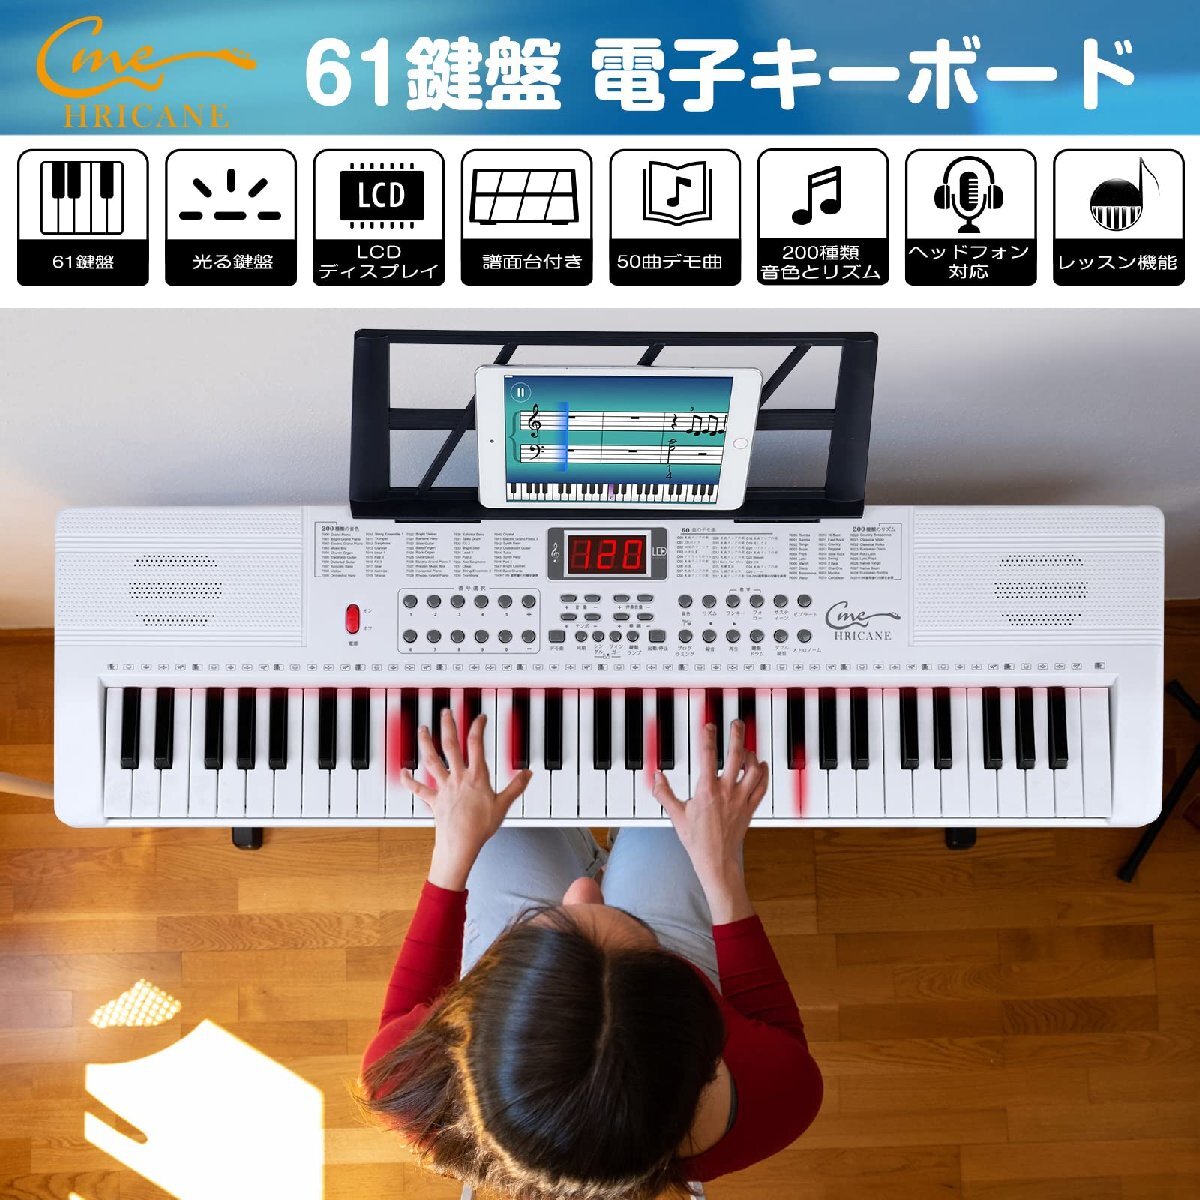 Hricane キーボード ピアノ 電子ピアノ 61鍵盤 200種類音色 200種類リズム 60曲デモ曲 LCDディスプレイ搭載 光る鍵盤 楽器 日_画像3